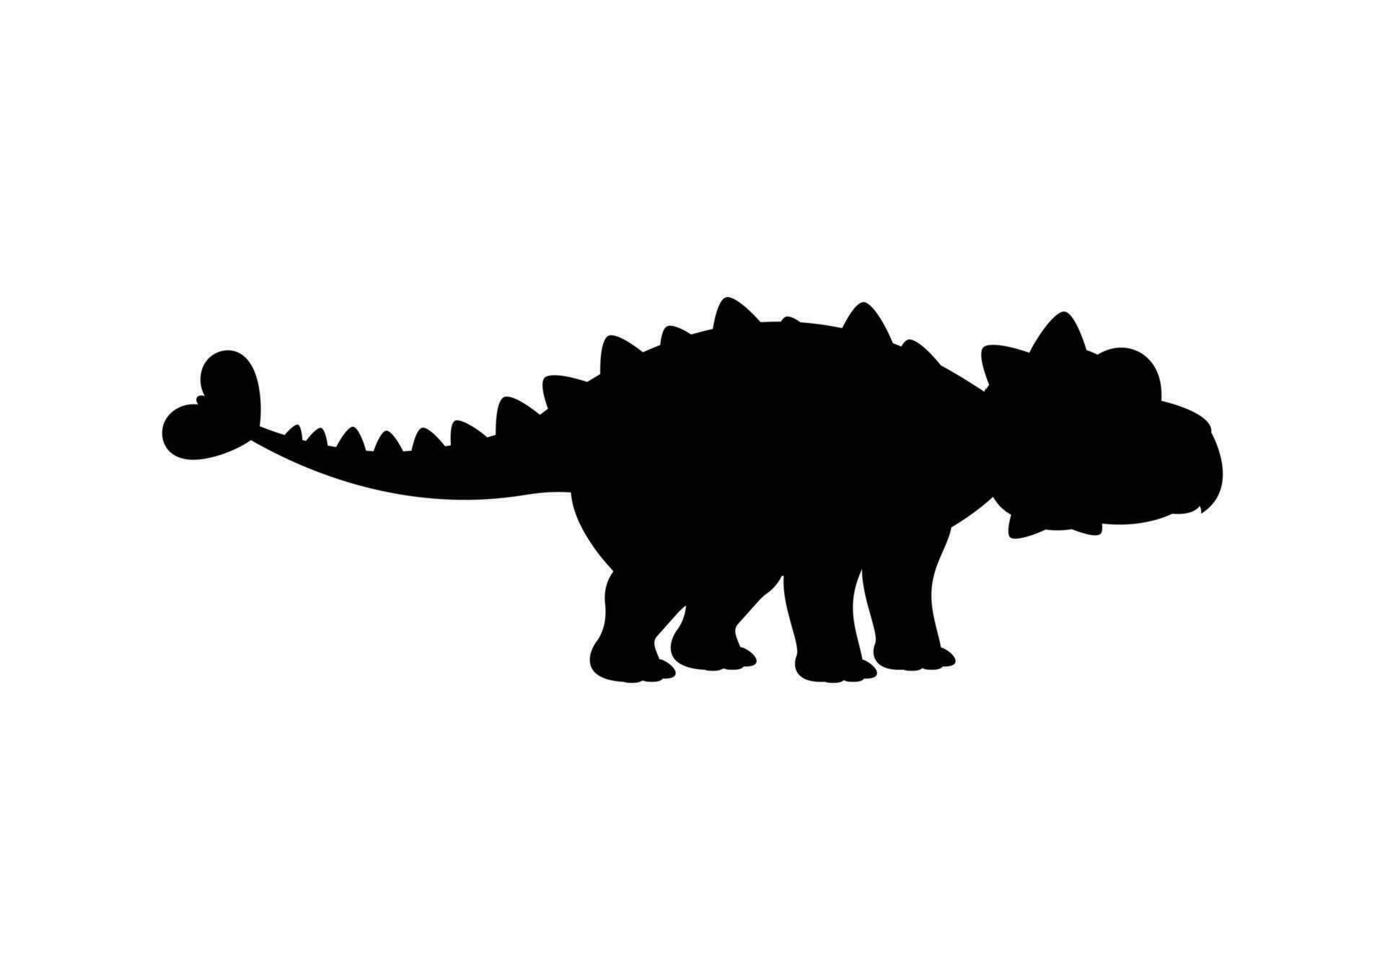 Ankylosaurus Dinosaur Silhouette Vector Isolated on White Background